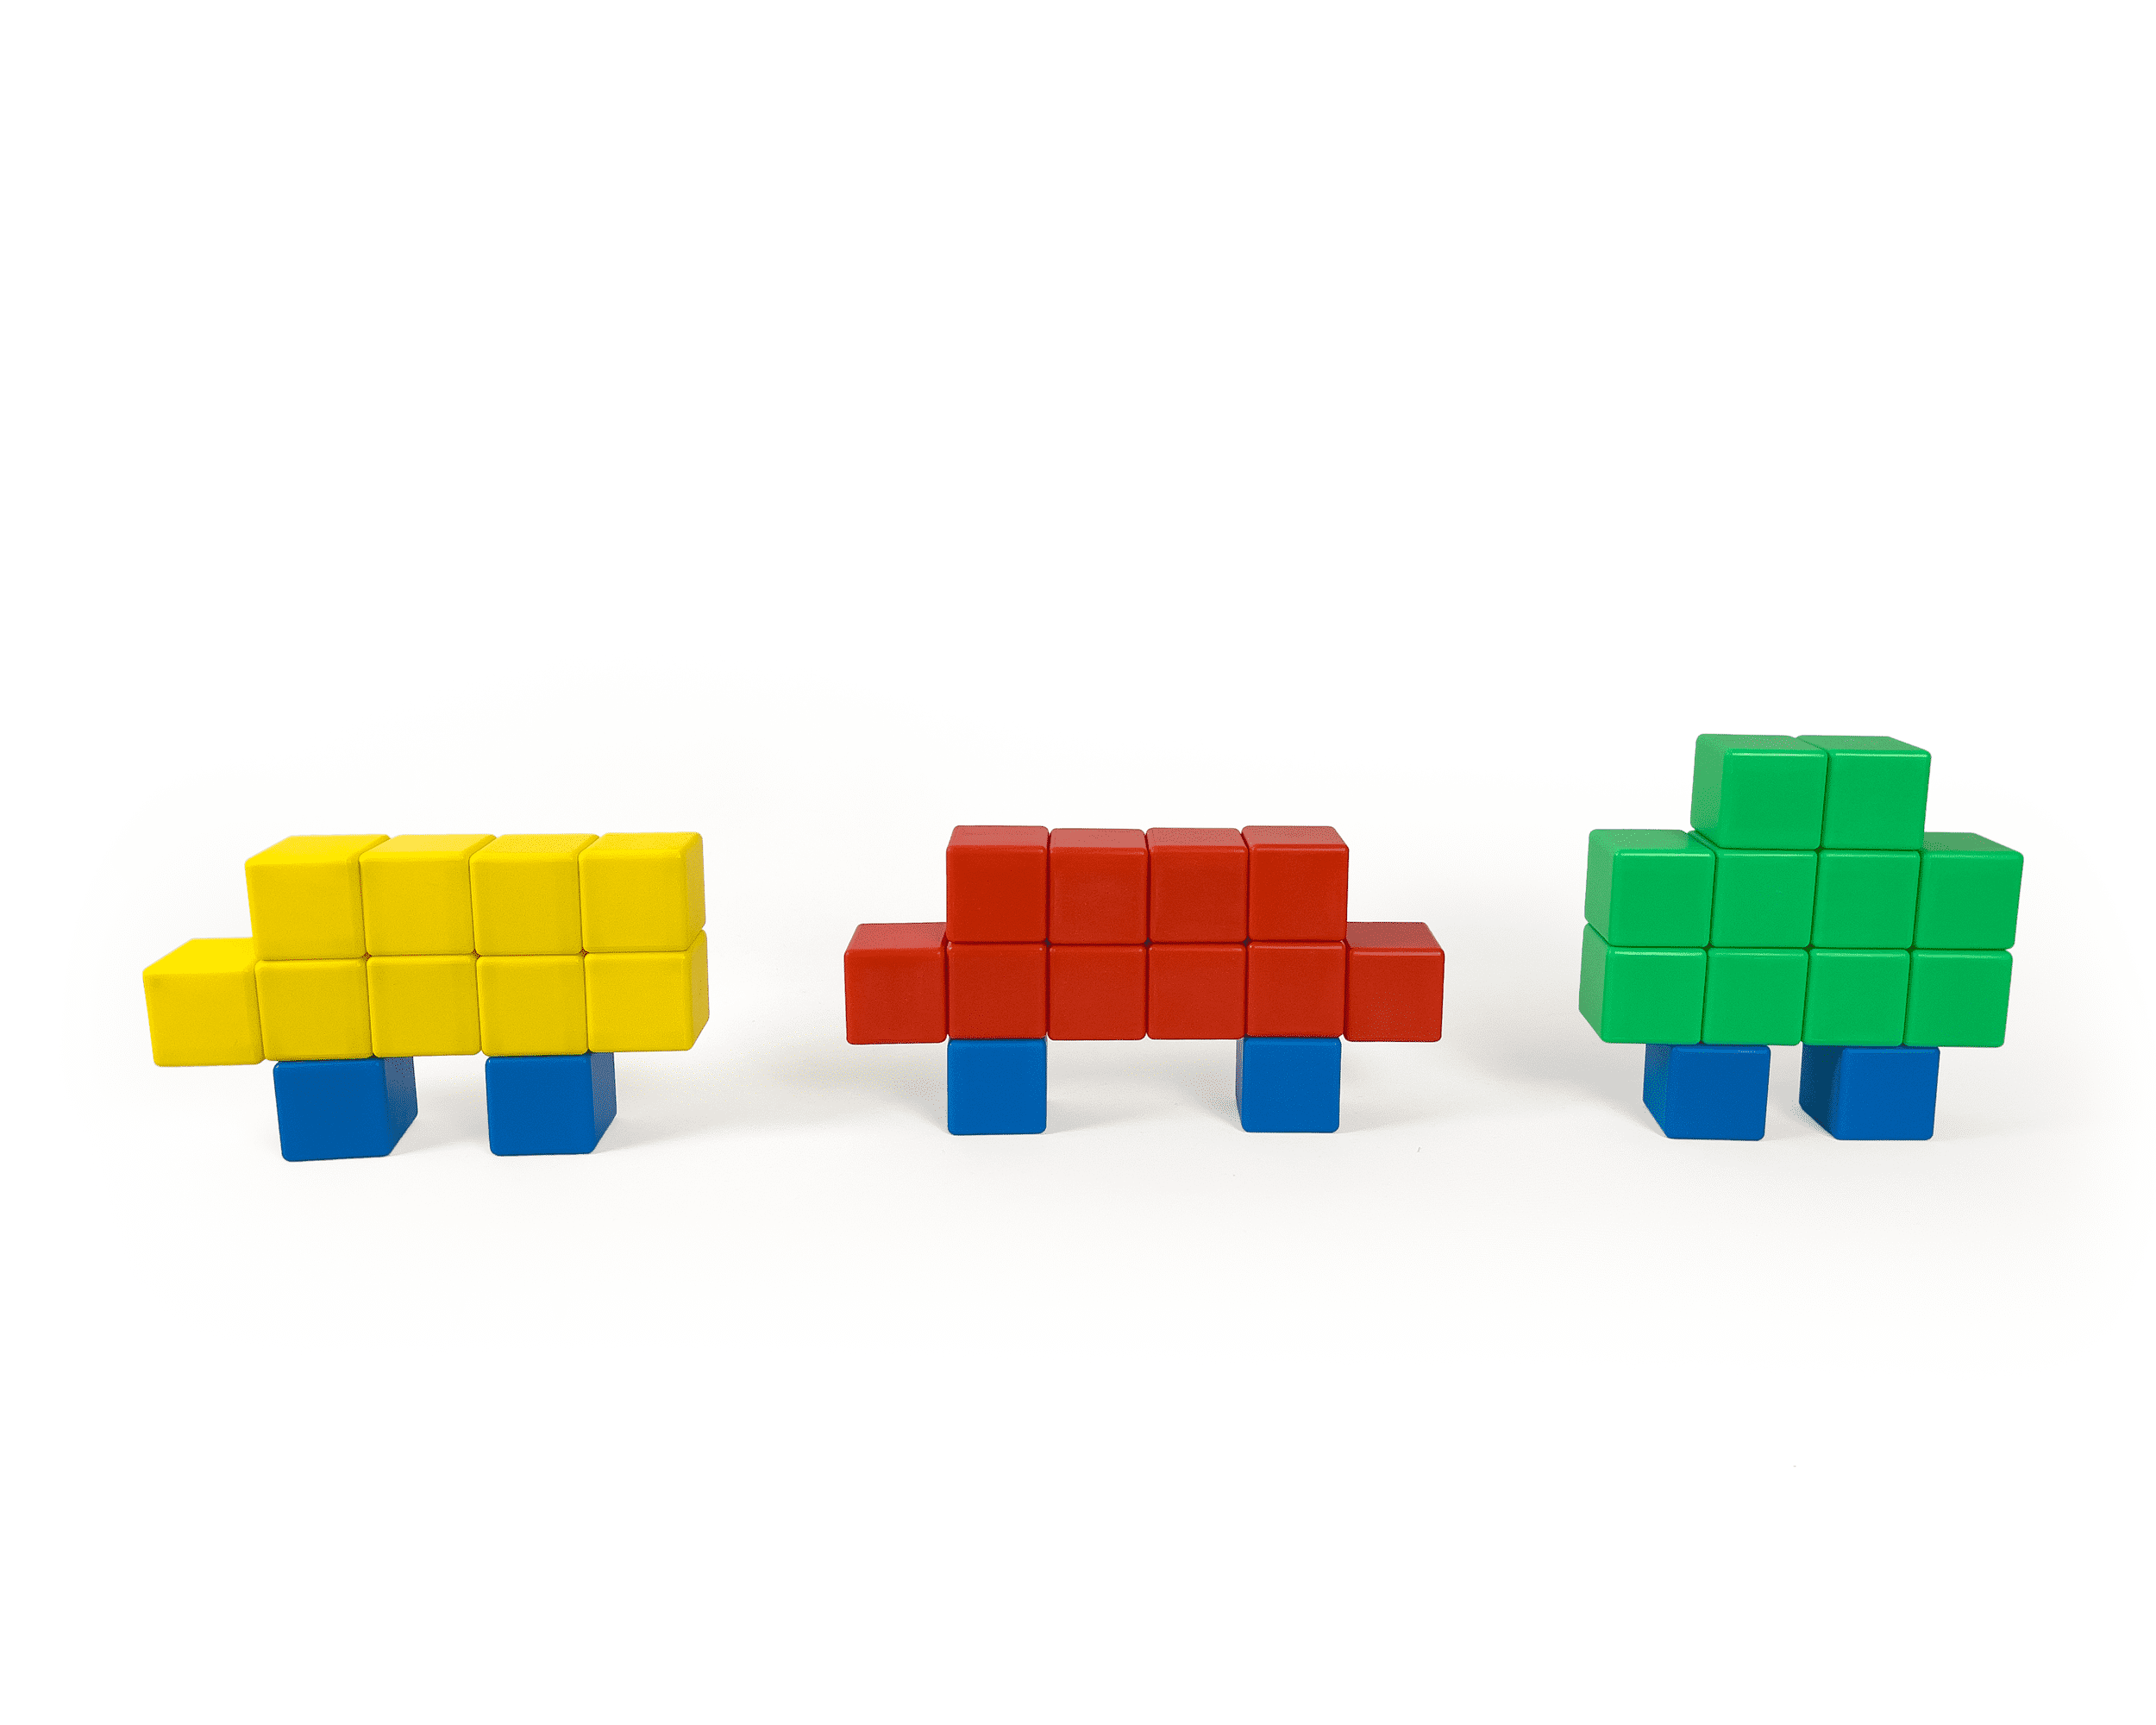  3D Magnetic Building Blocks Magic Magnetic Cubes, Set